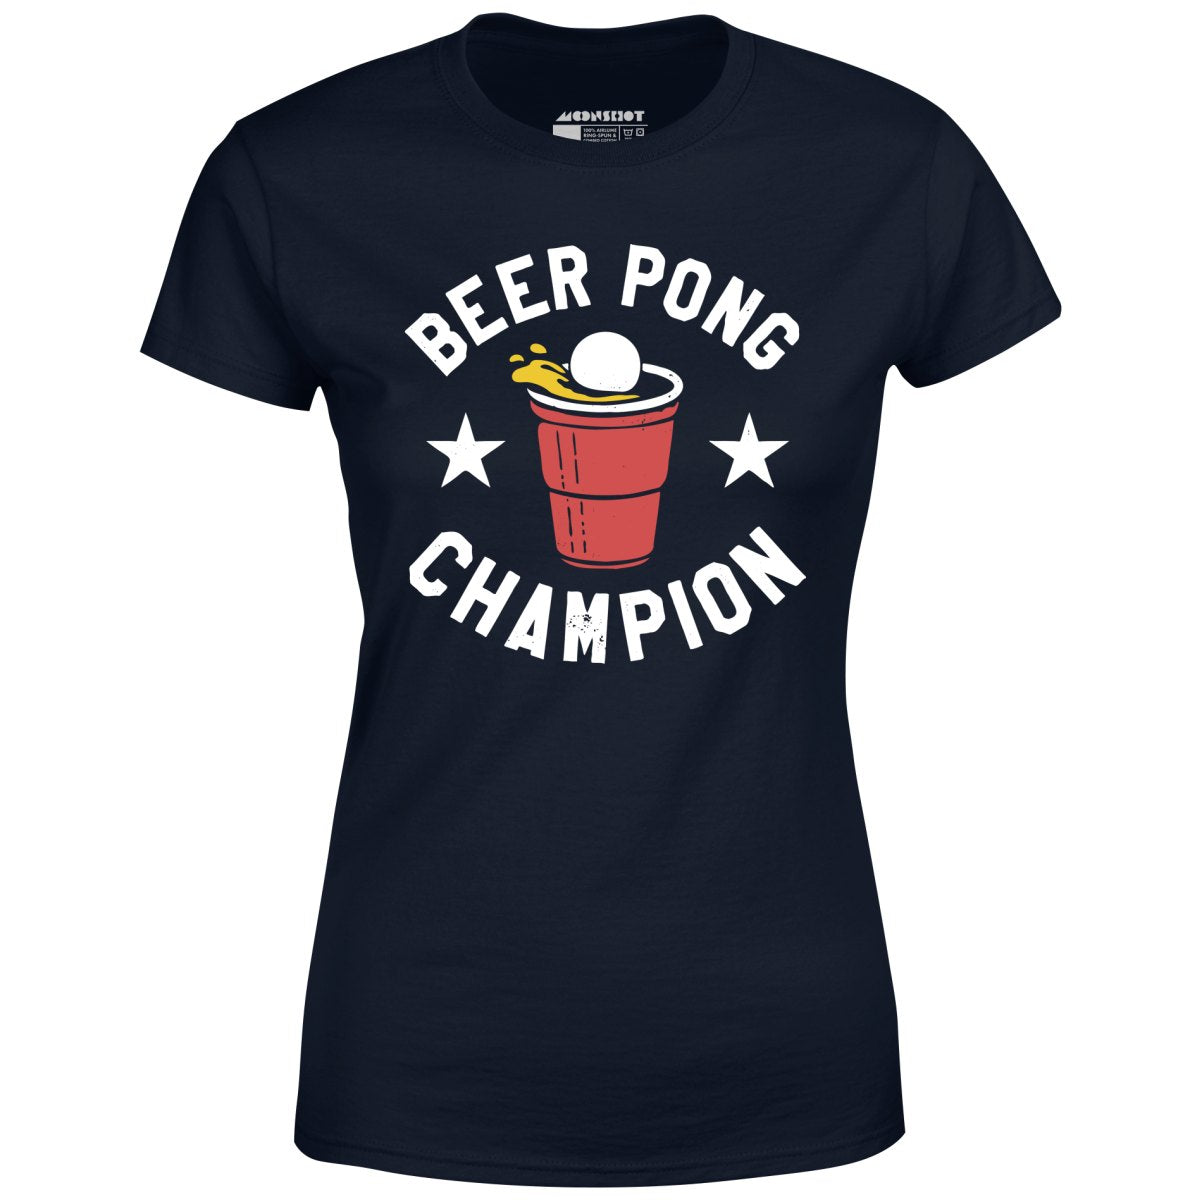 Beer Pong Champion - Women's T-Shirt